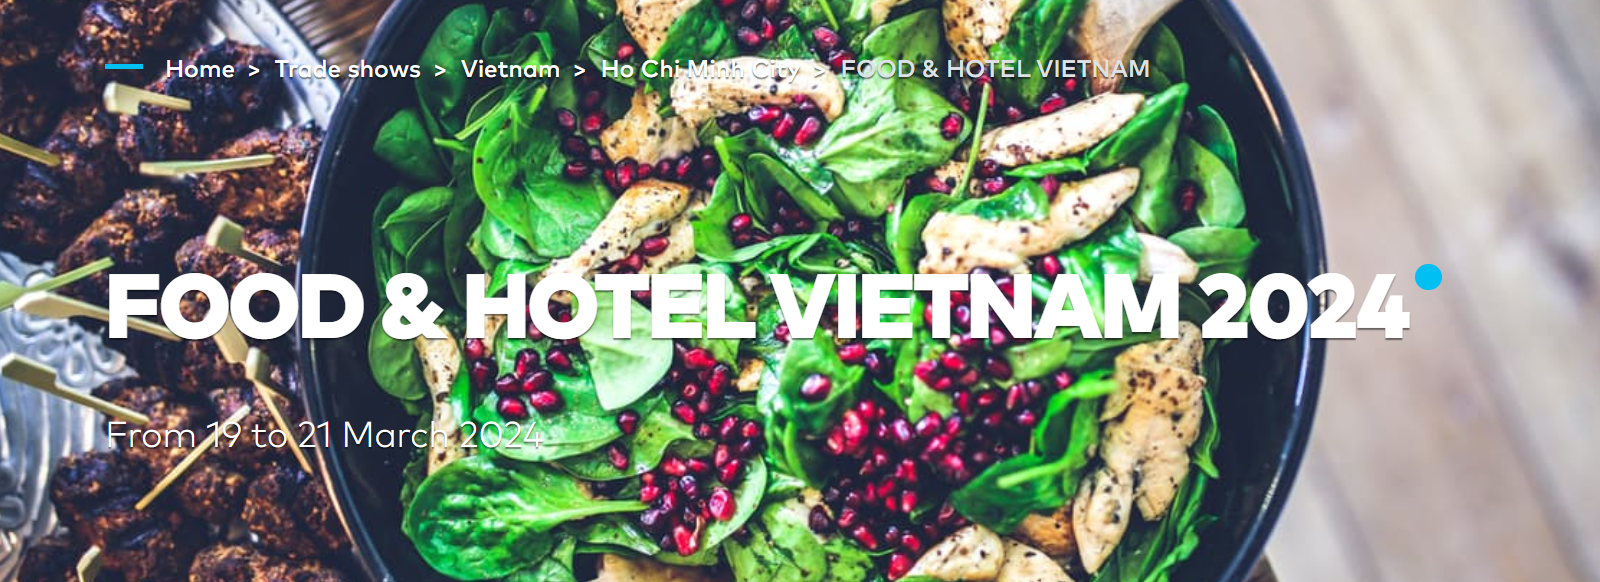 「FOOD & HOTEL VIETNAM Ho Chi Minh City 2024」